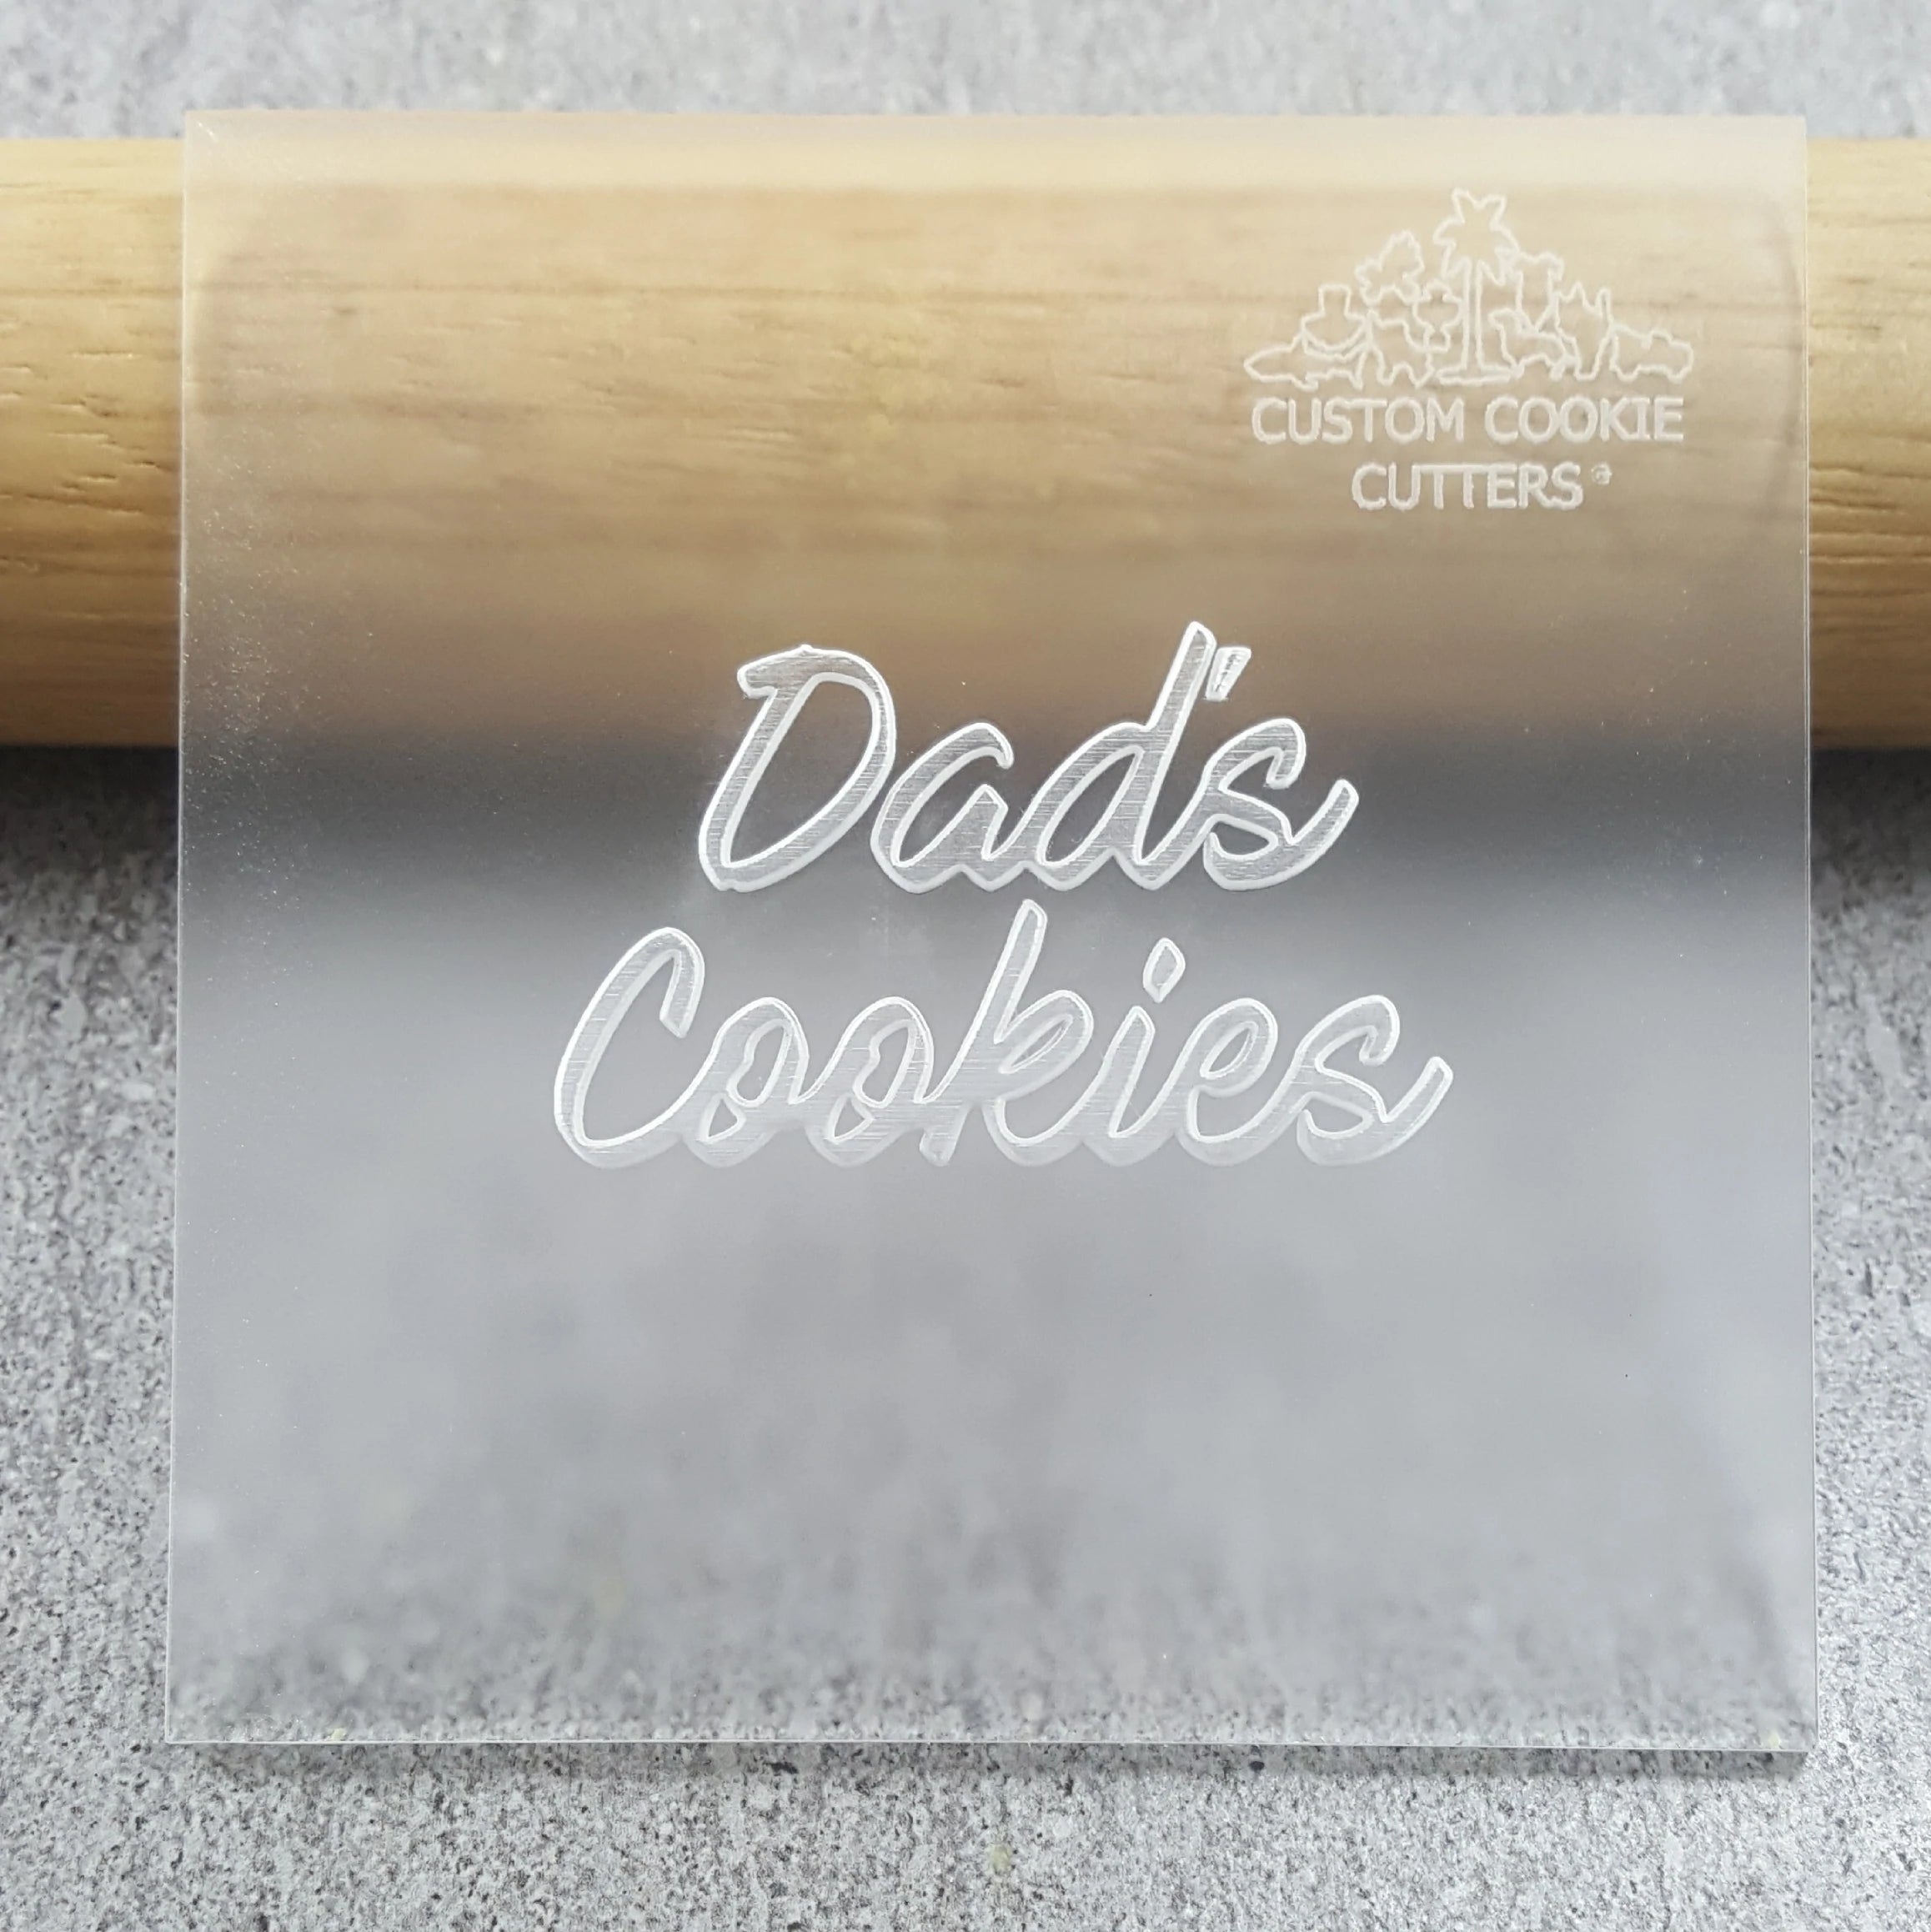 Custom Cookie Cutter Dads Cookies Debosser